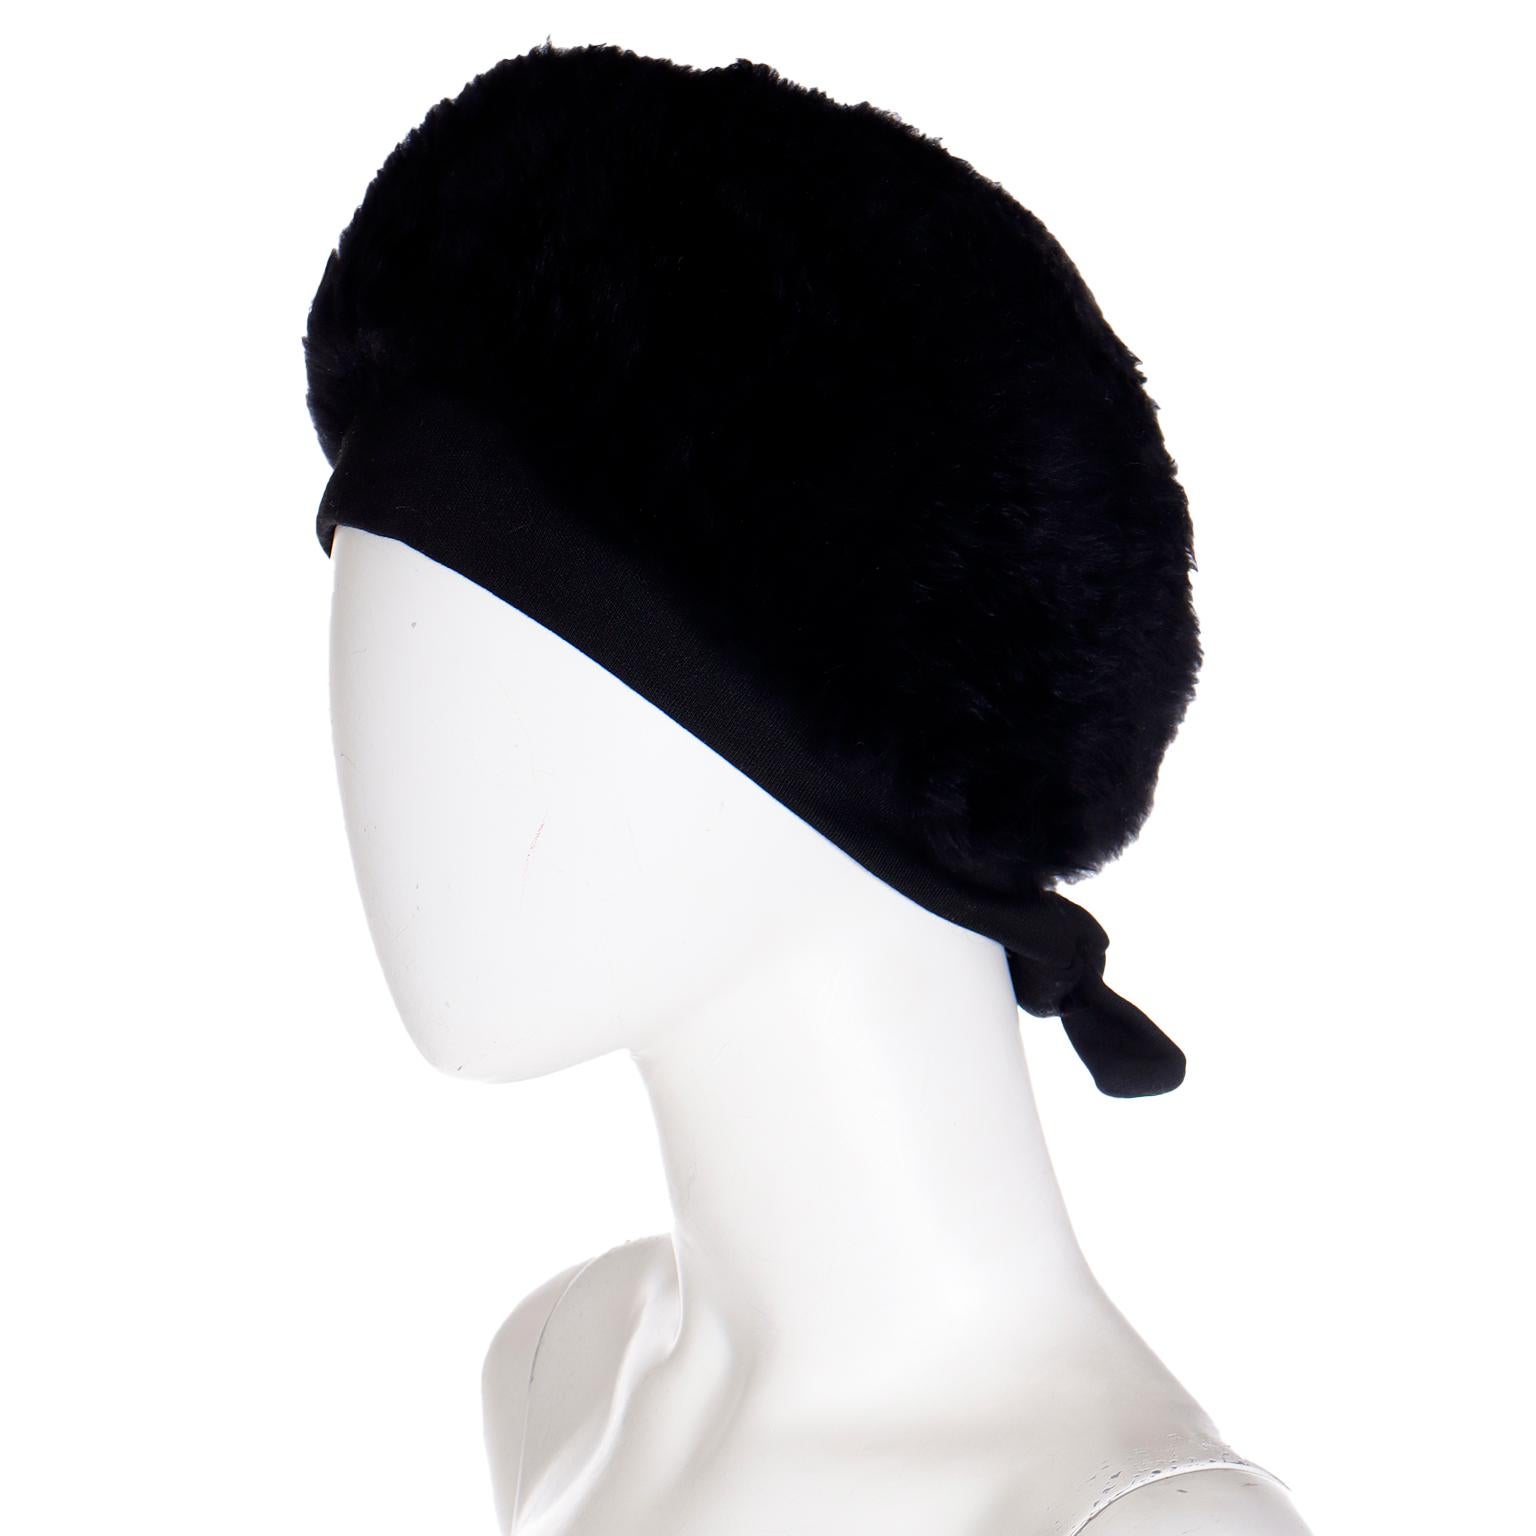 Yves Saint Laurent 1970s Russian inspired Vintage Black Fur Hat For Sale 1